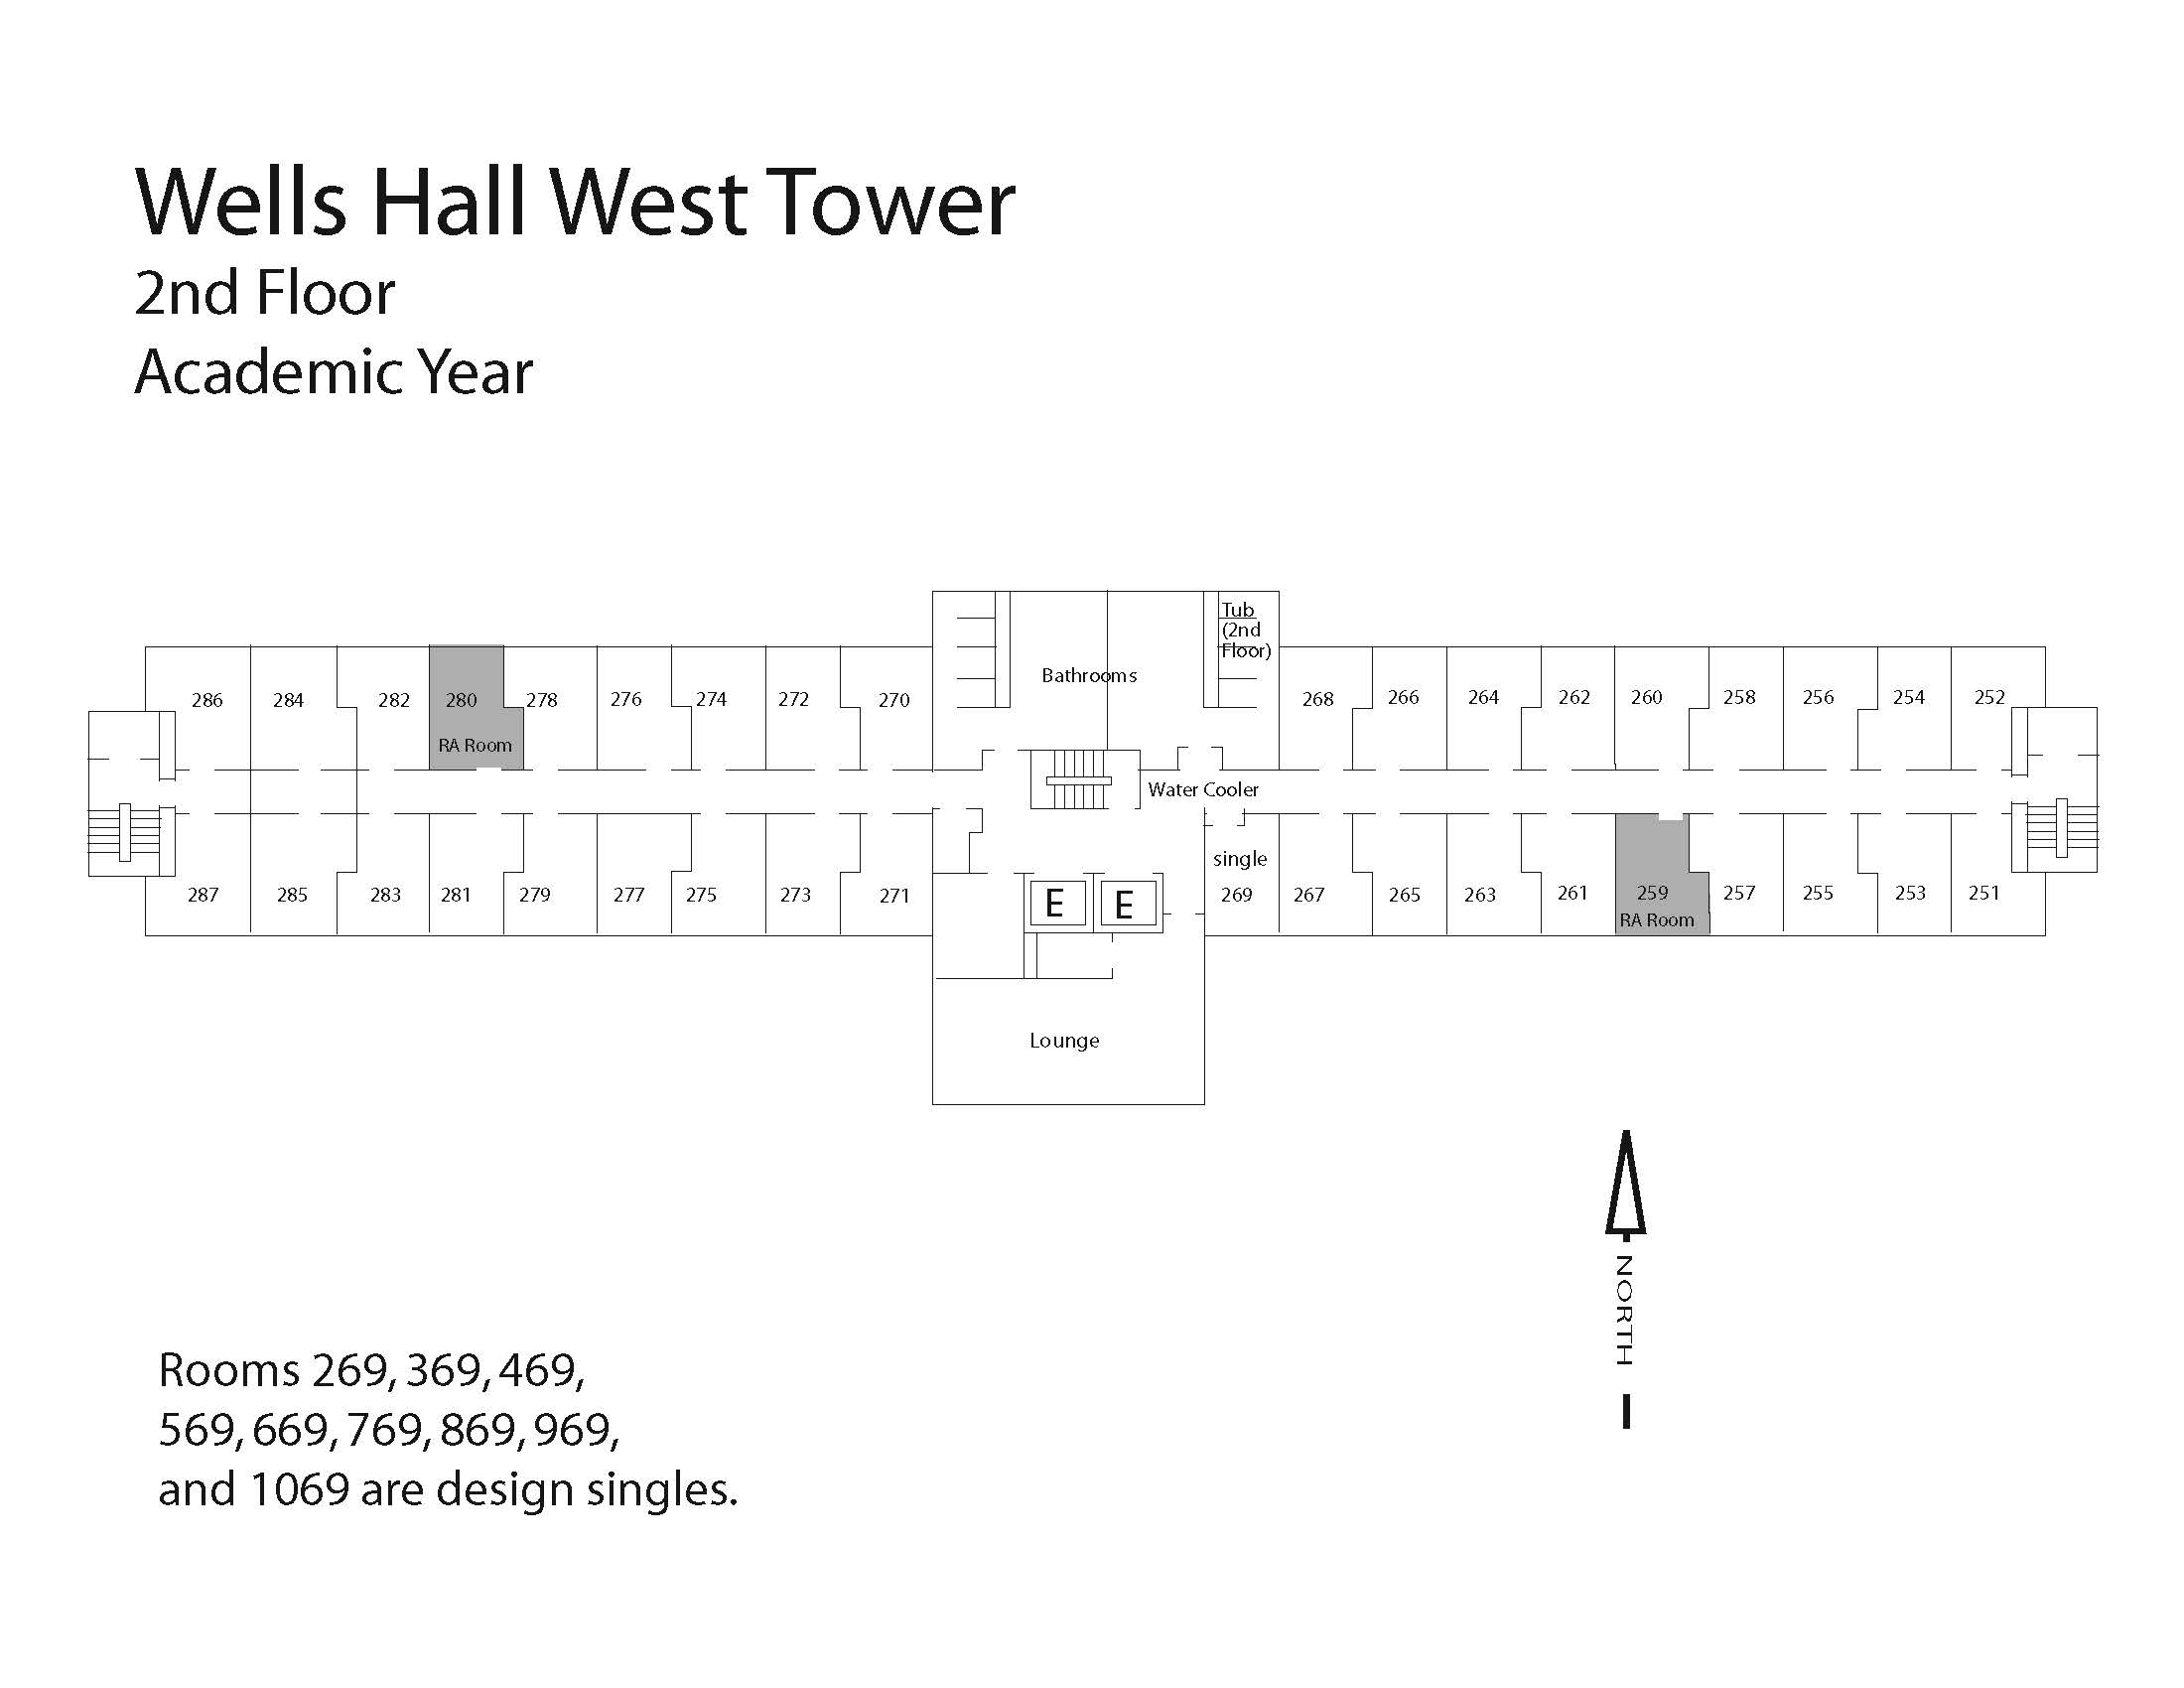 Wells Hall west tower 2nd floor